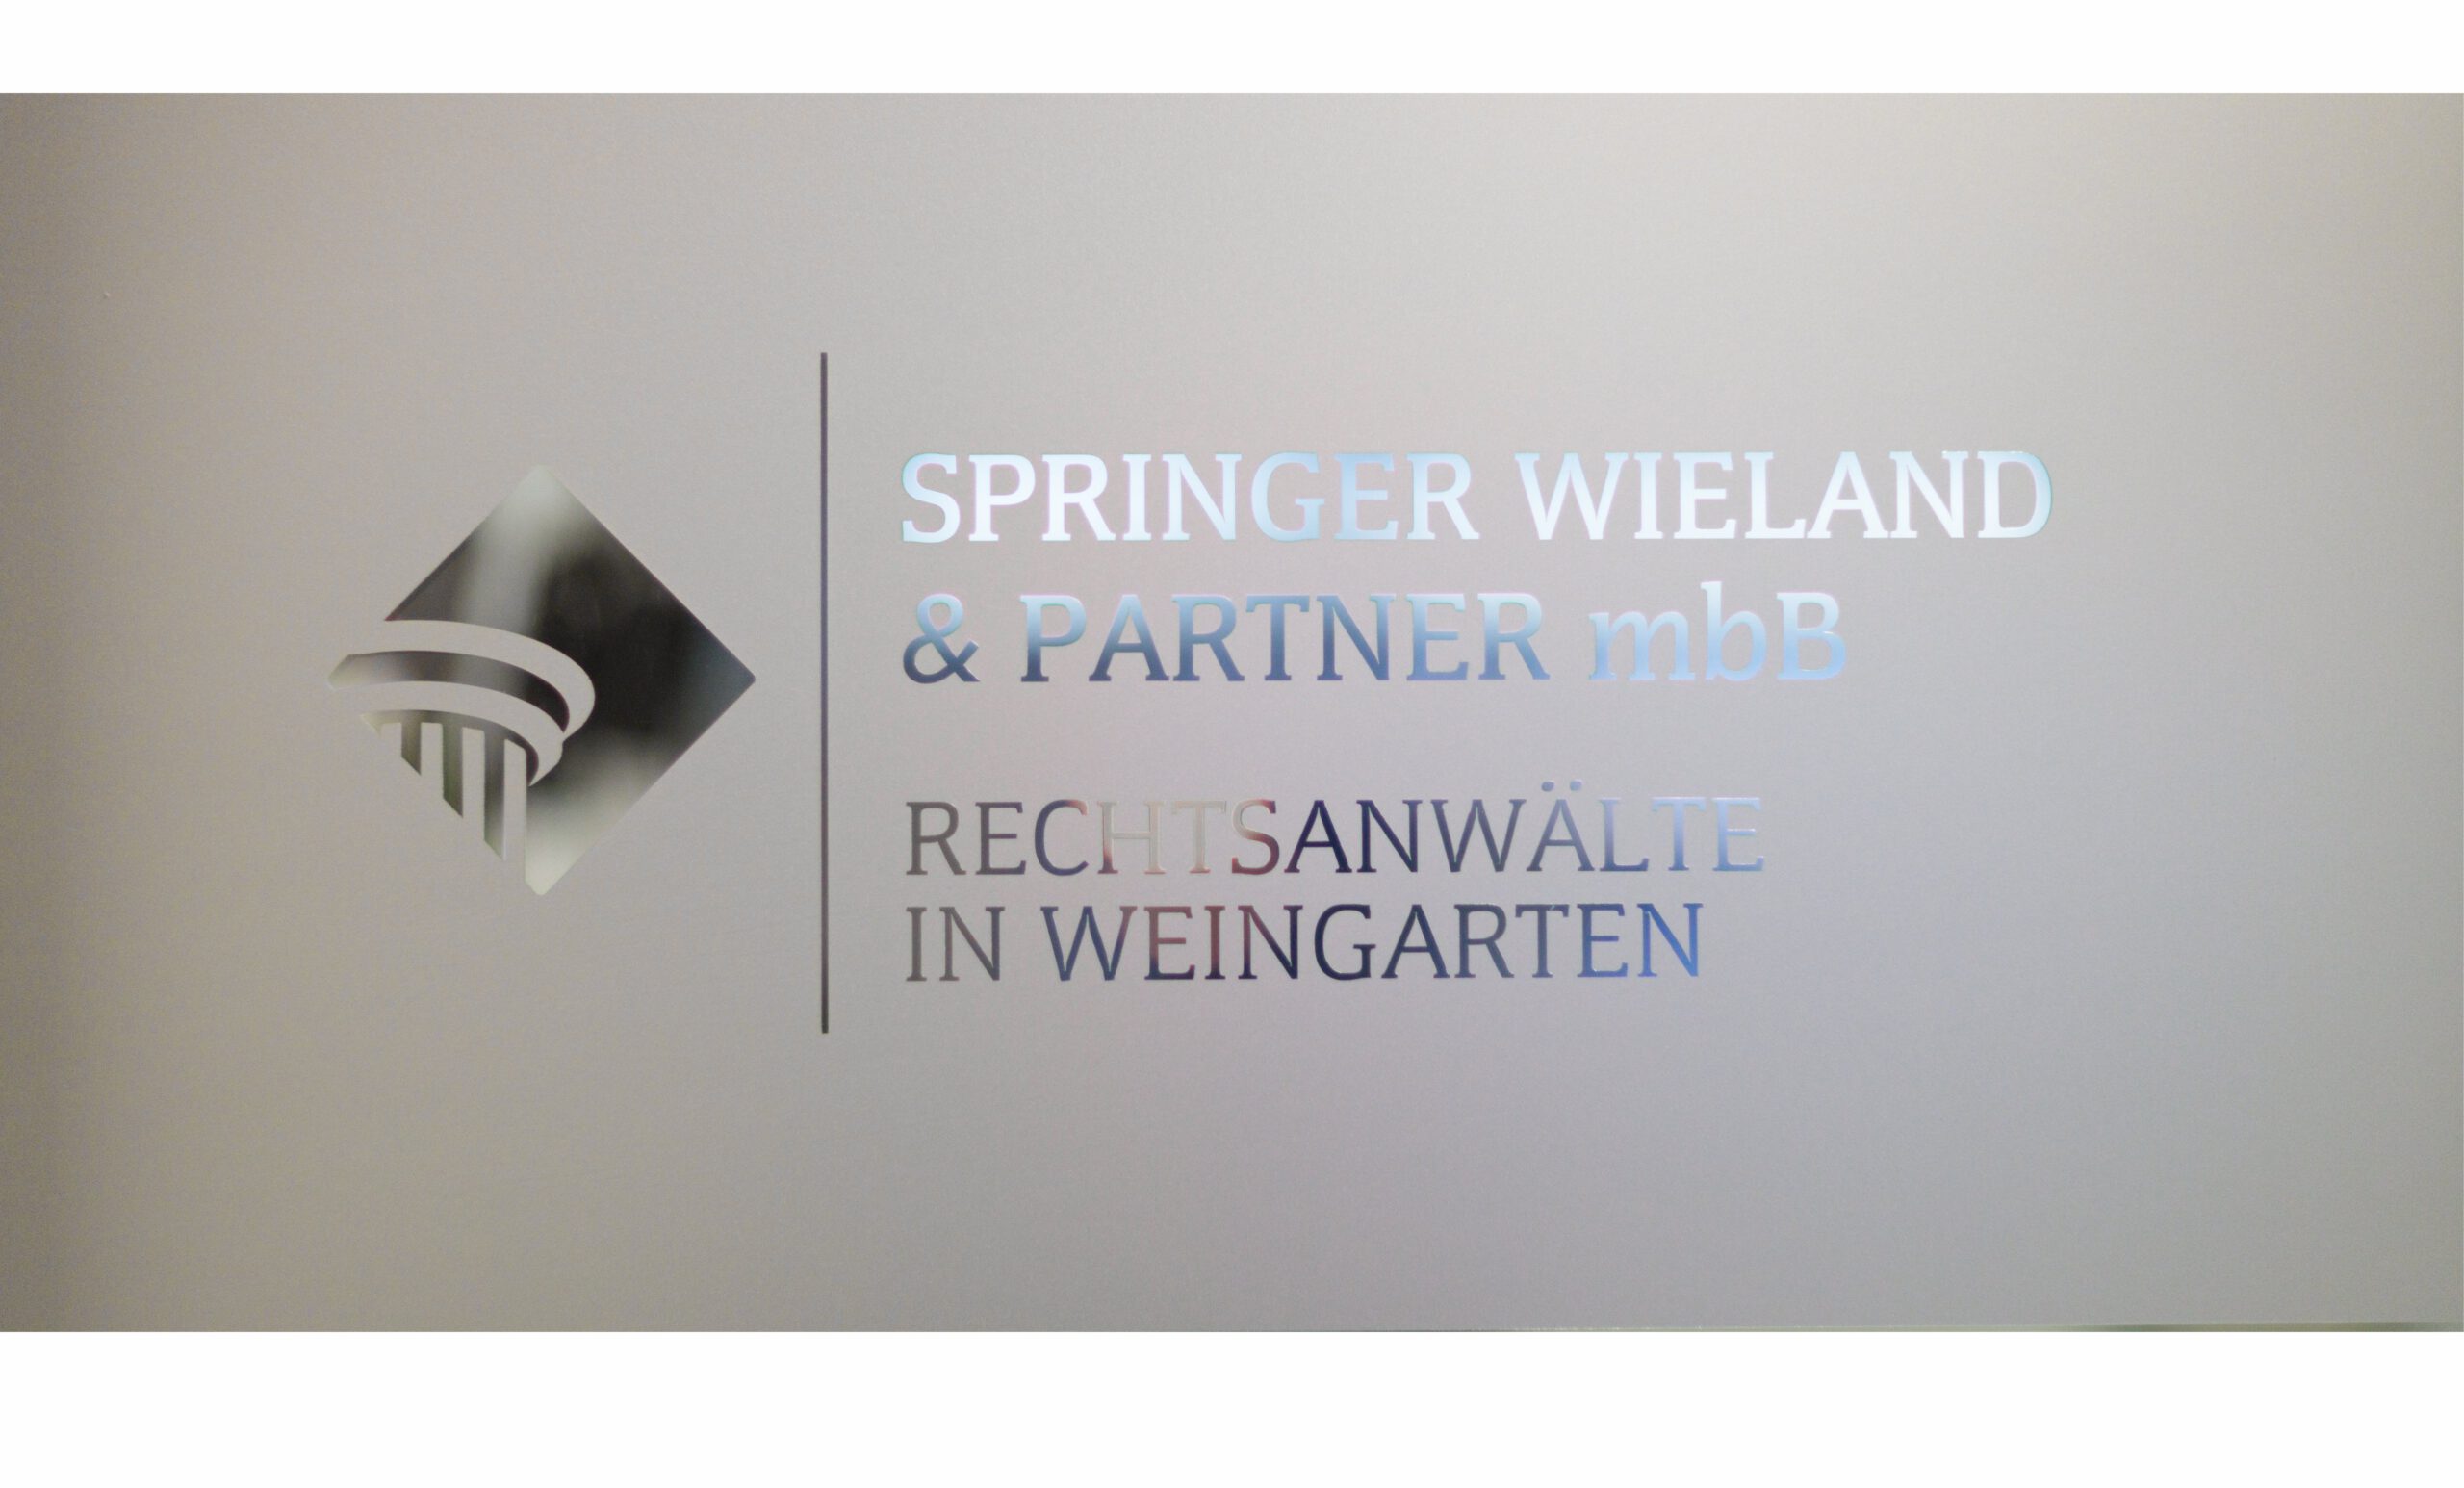 Symbolbild Springer Wieland & Partner mbB Rechtsanwälte. Foto: Wynrich Zlomkle 2022